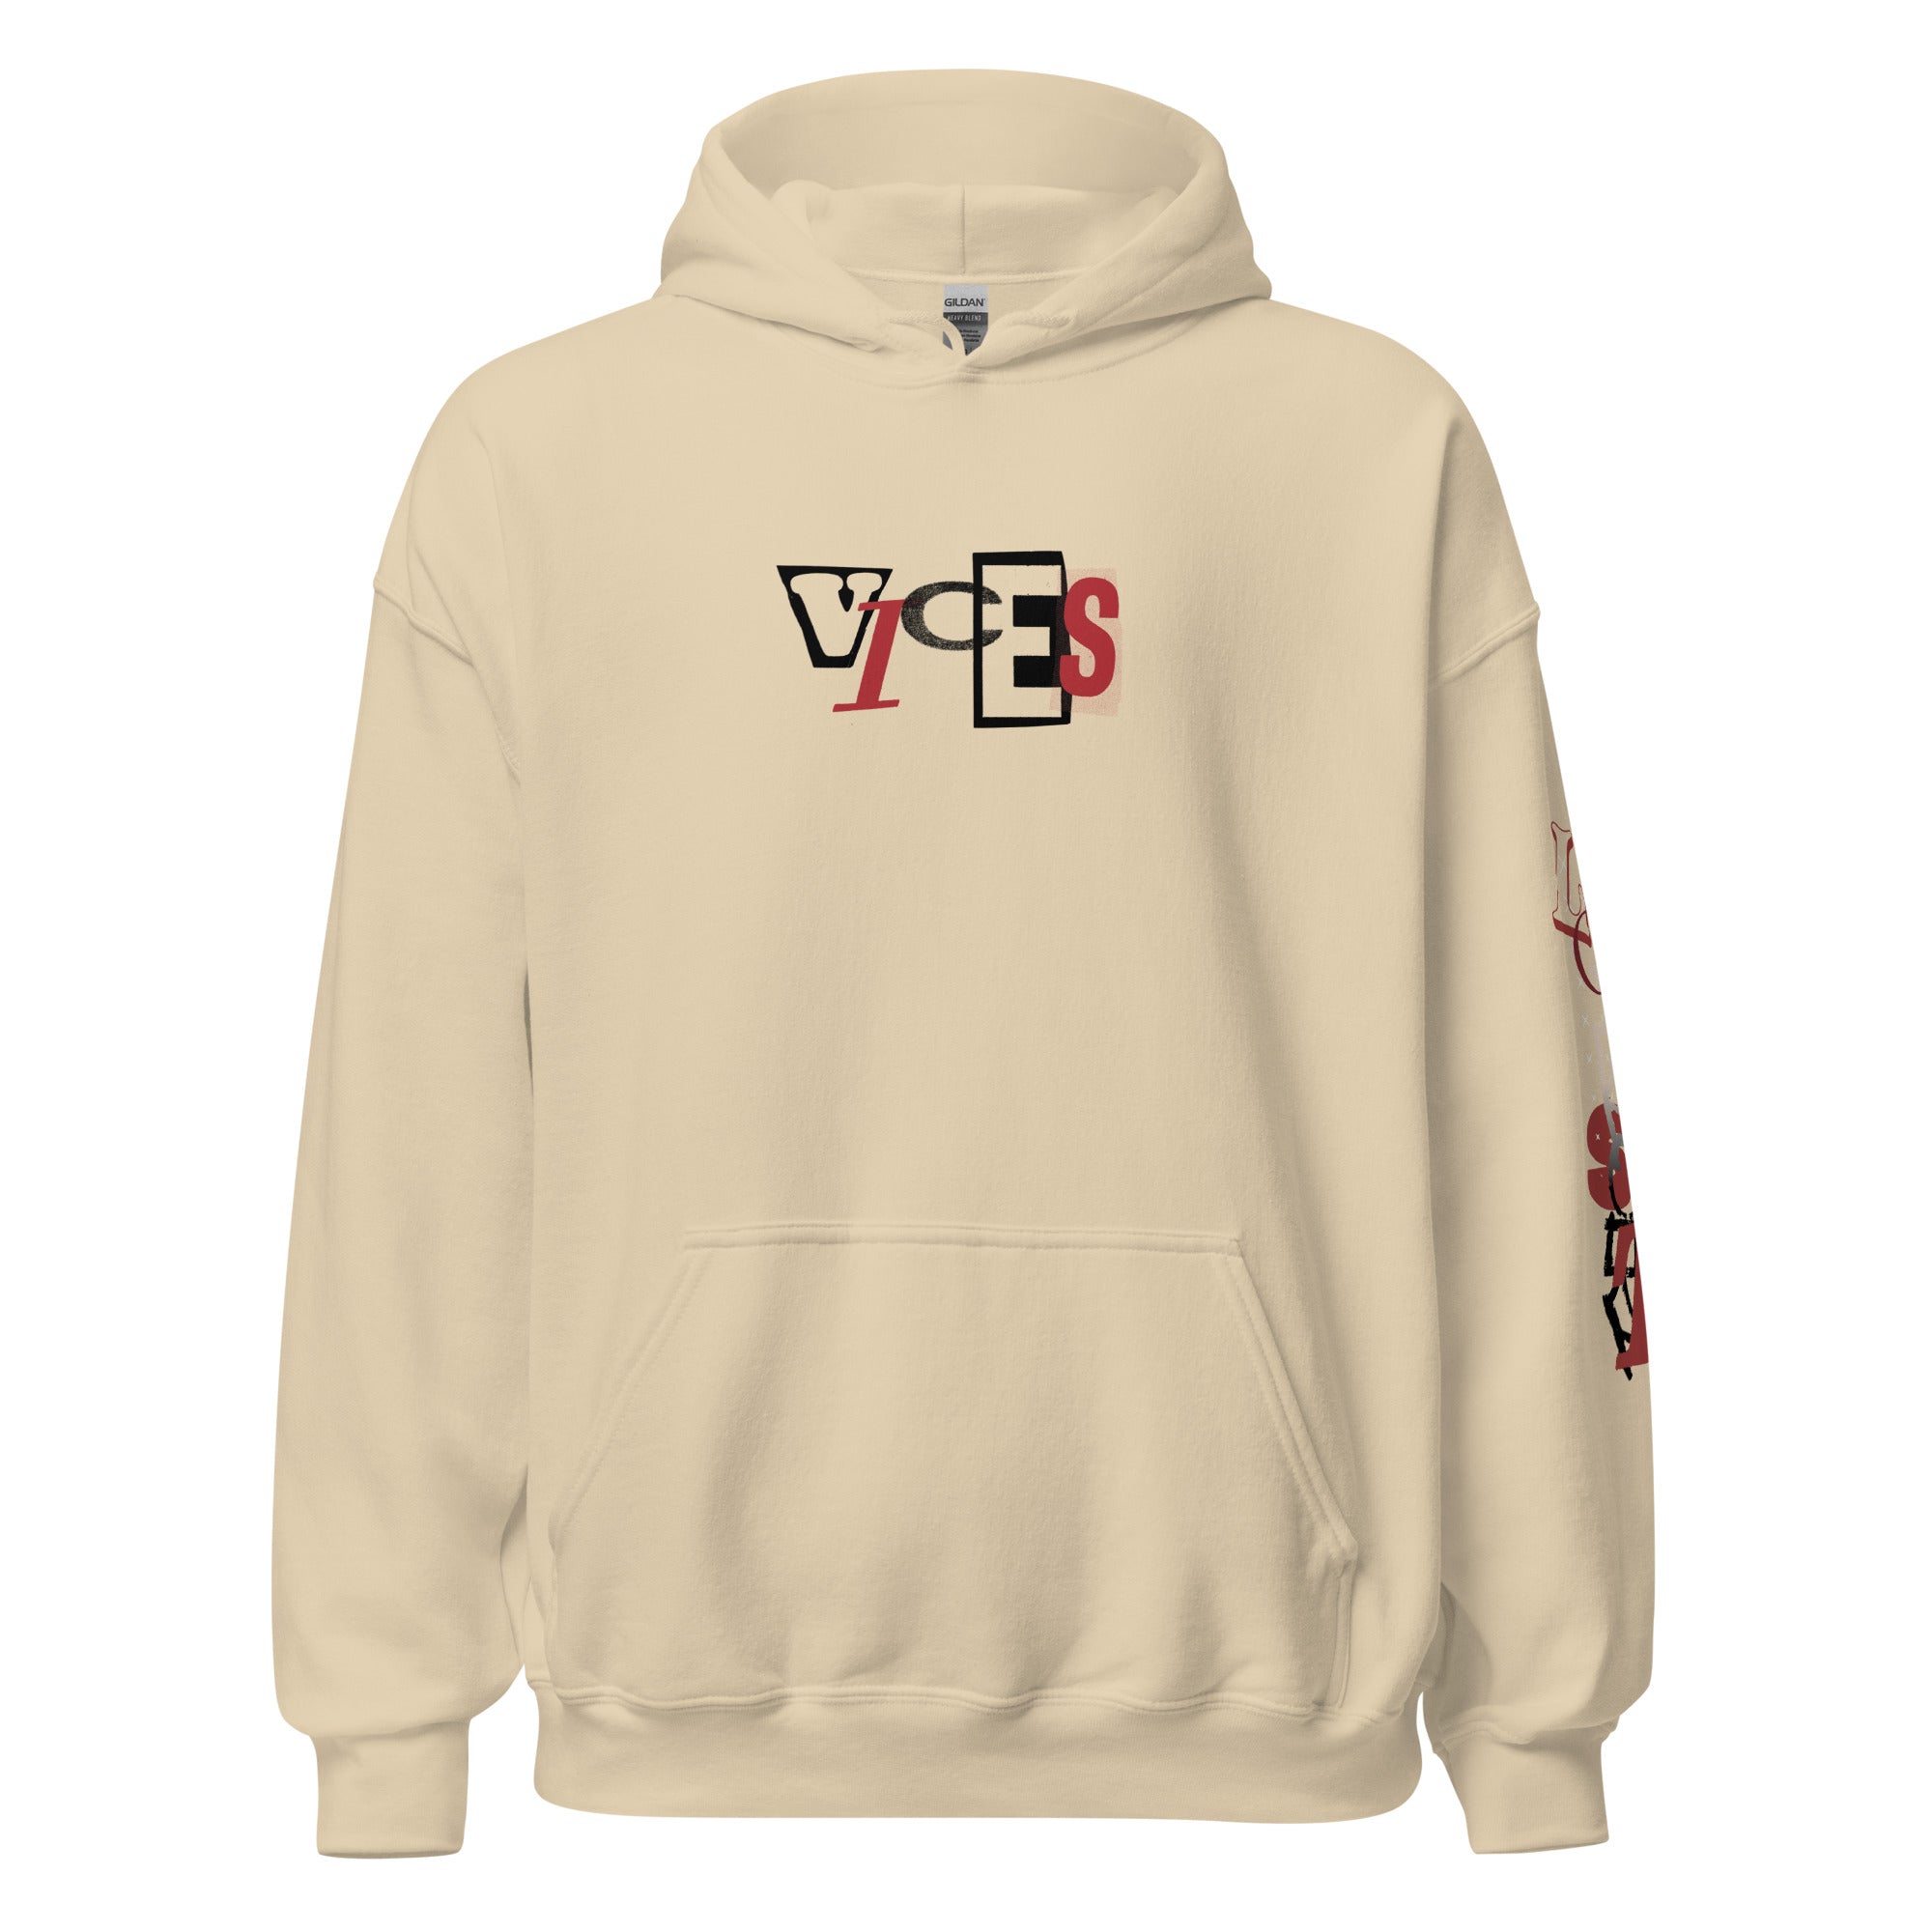 VICES • hoodie - Jackler - anime-inspired streetwear - anime clothing